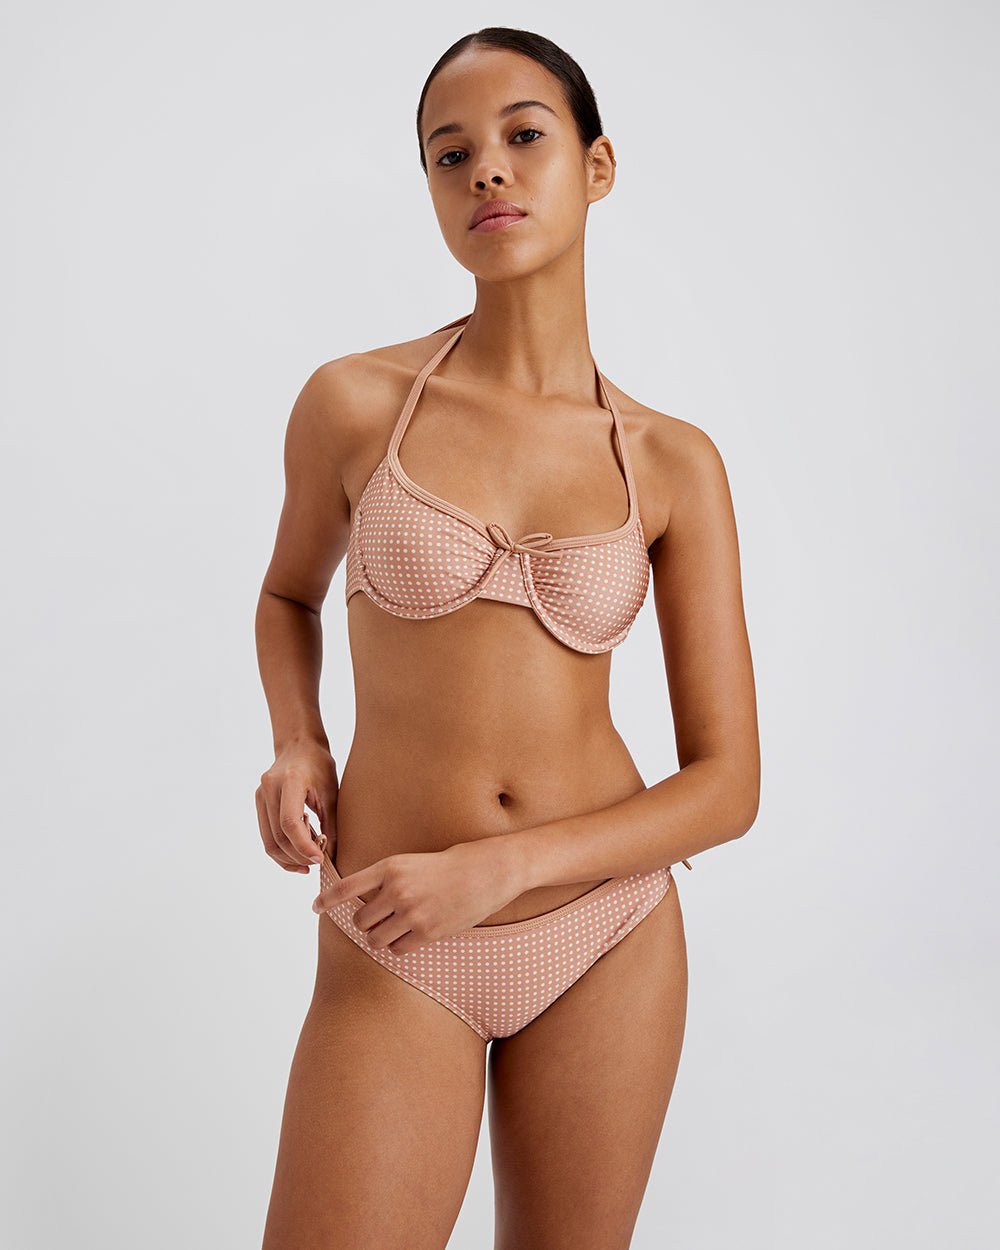 The Sydney Bikini Bottom - Solid & Striped